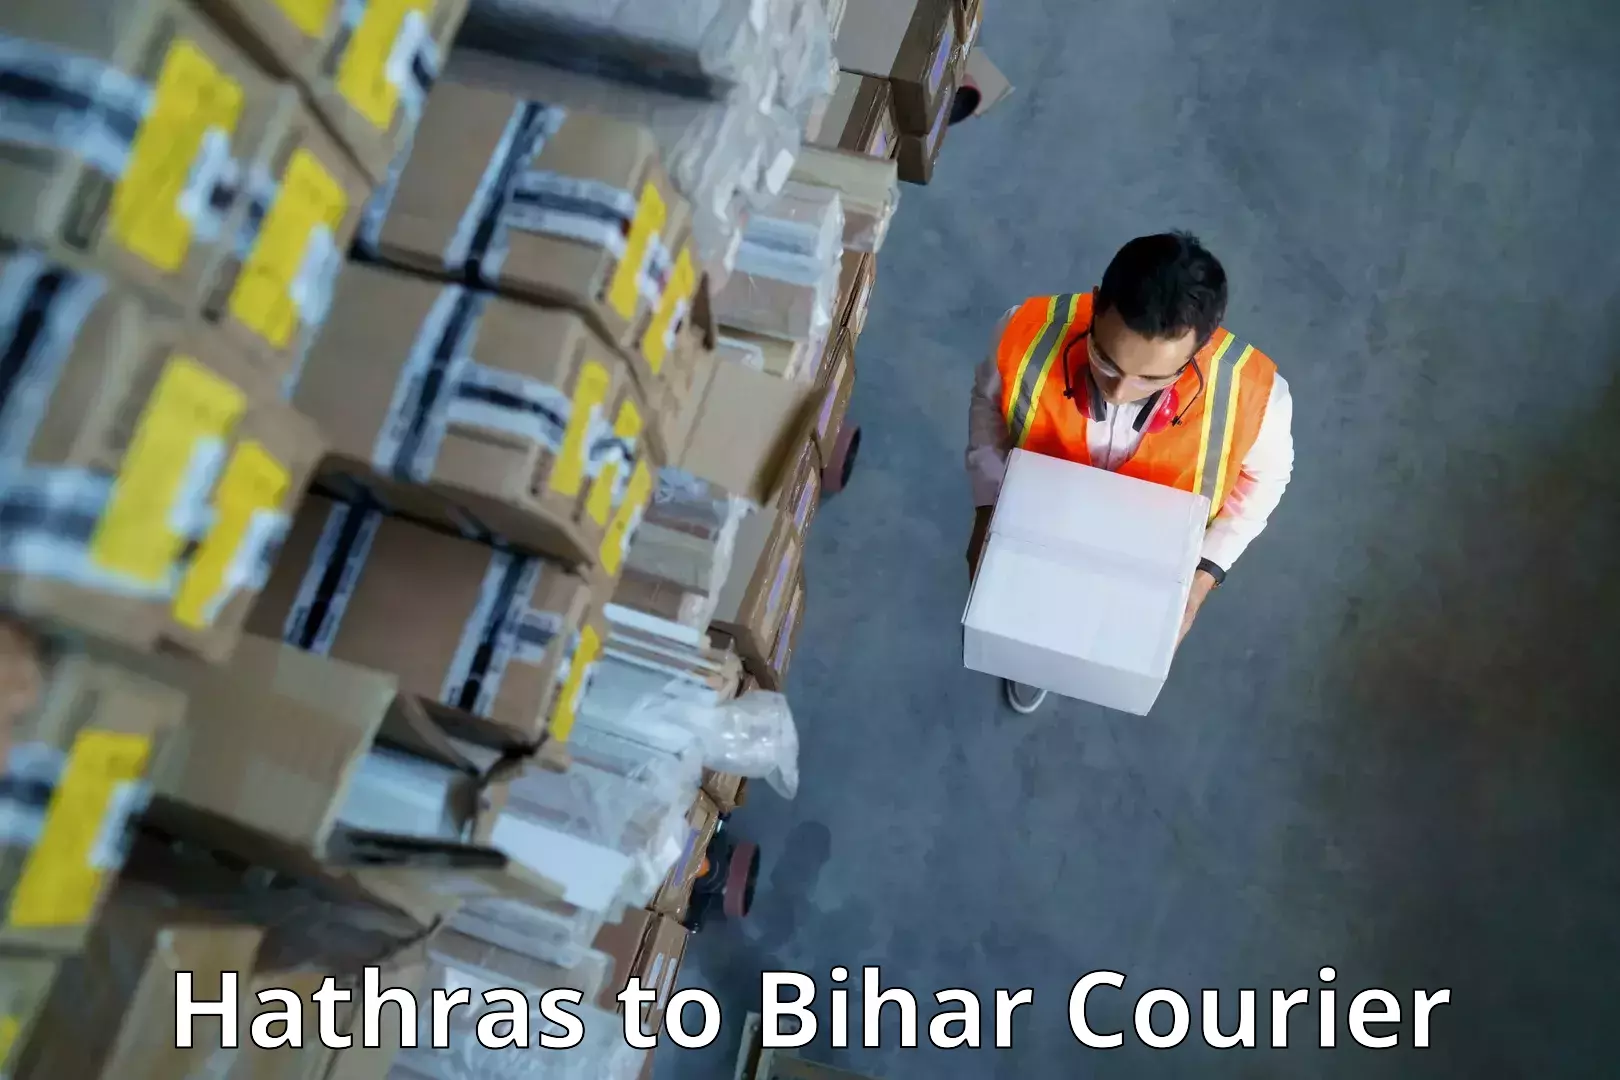 Courier membership Hathras to Aurangabad Bihar